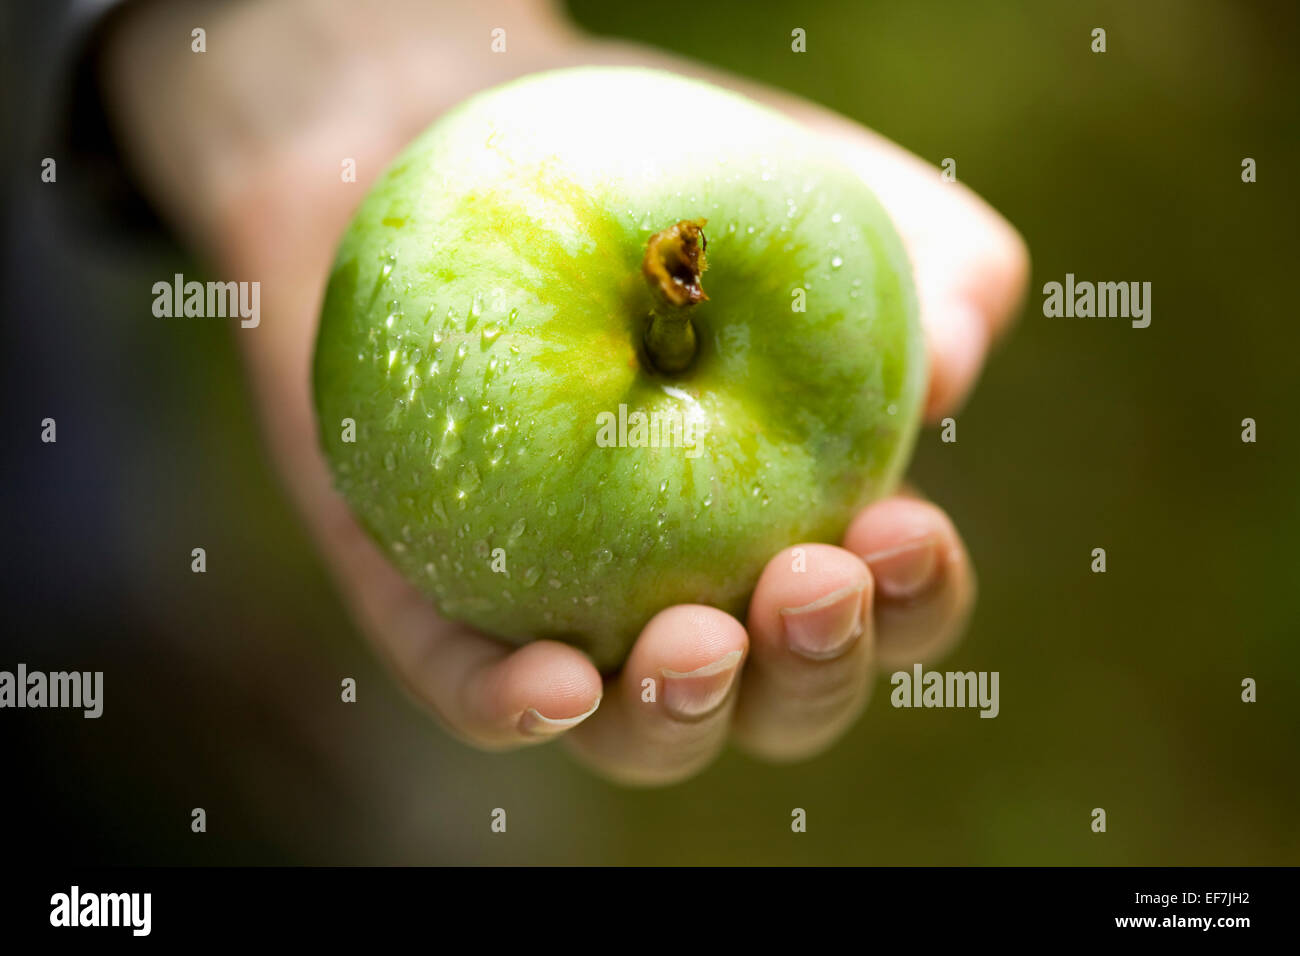 Mano sosteniendo manzana verde fresco Foto de stock